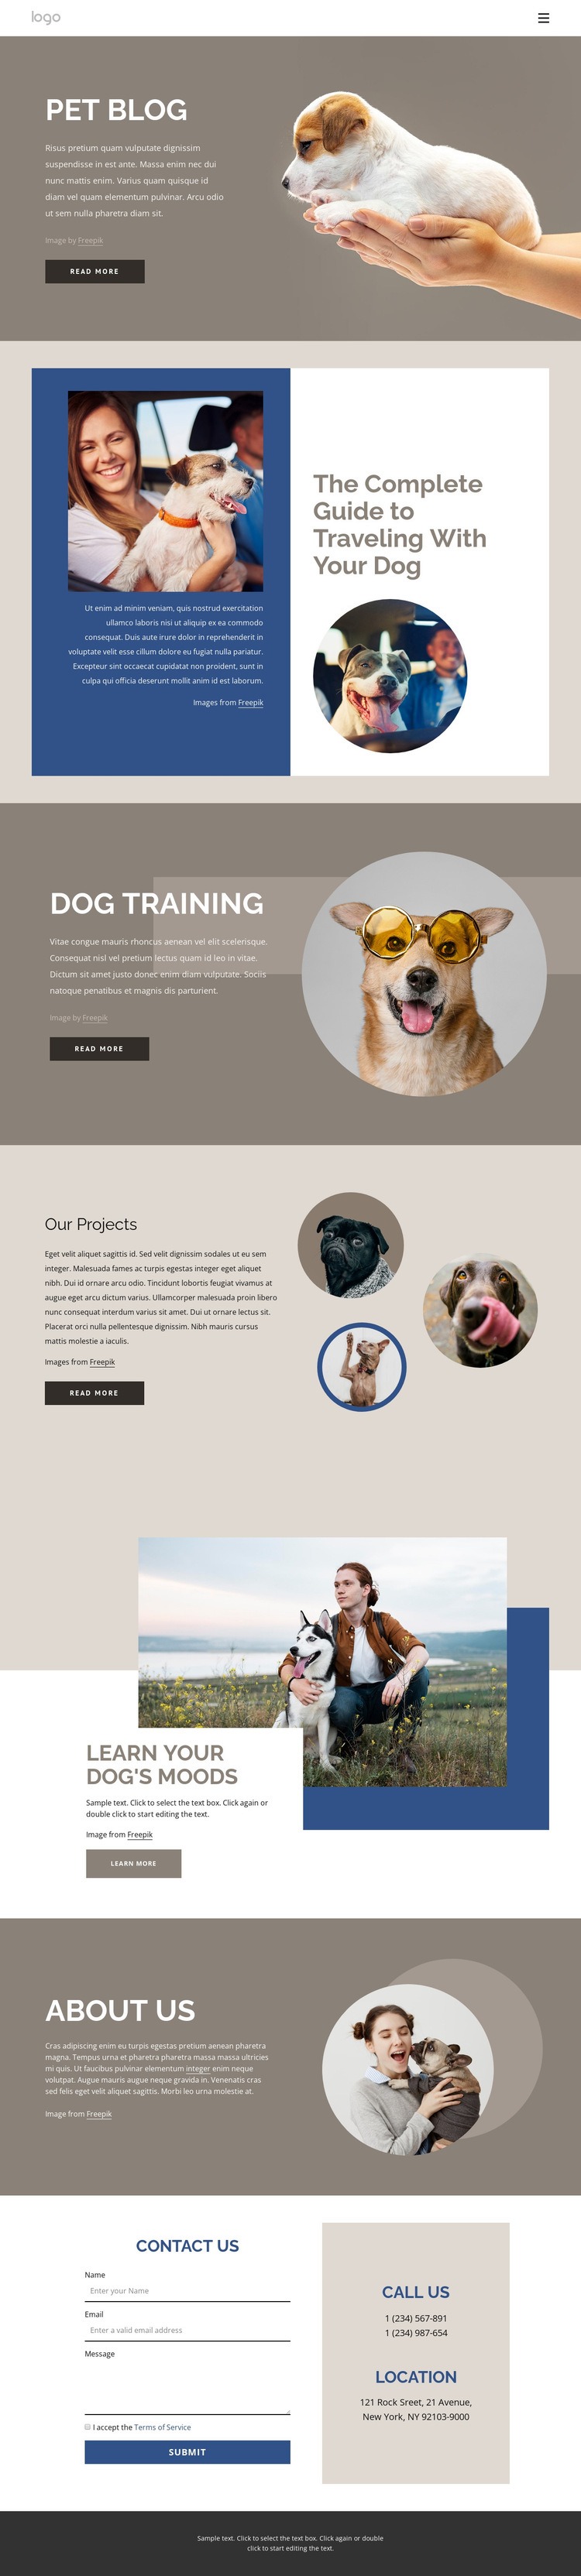 Pet Blog Homepage Design